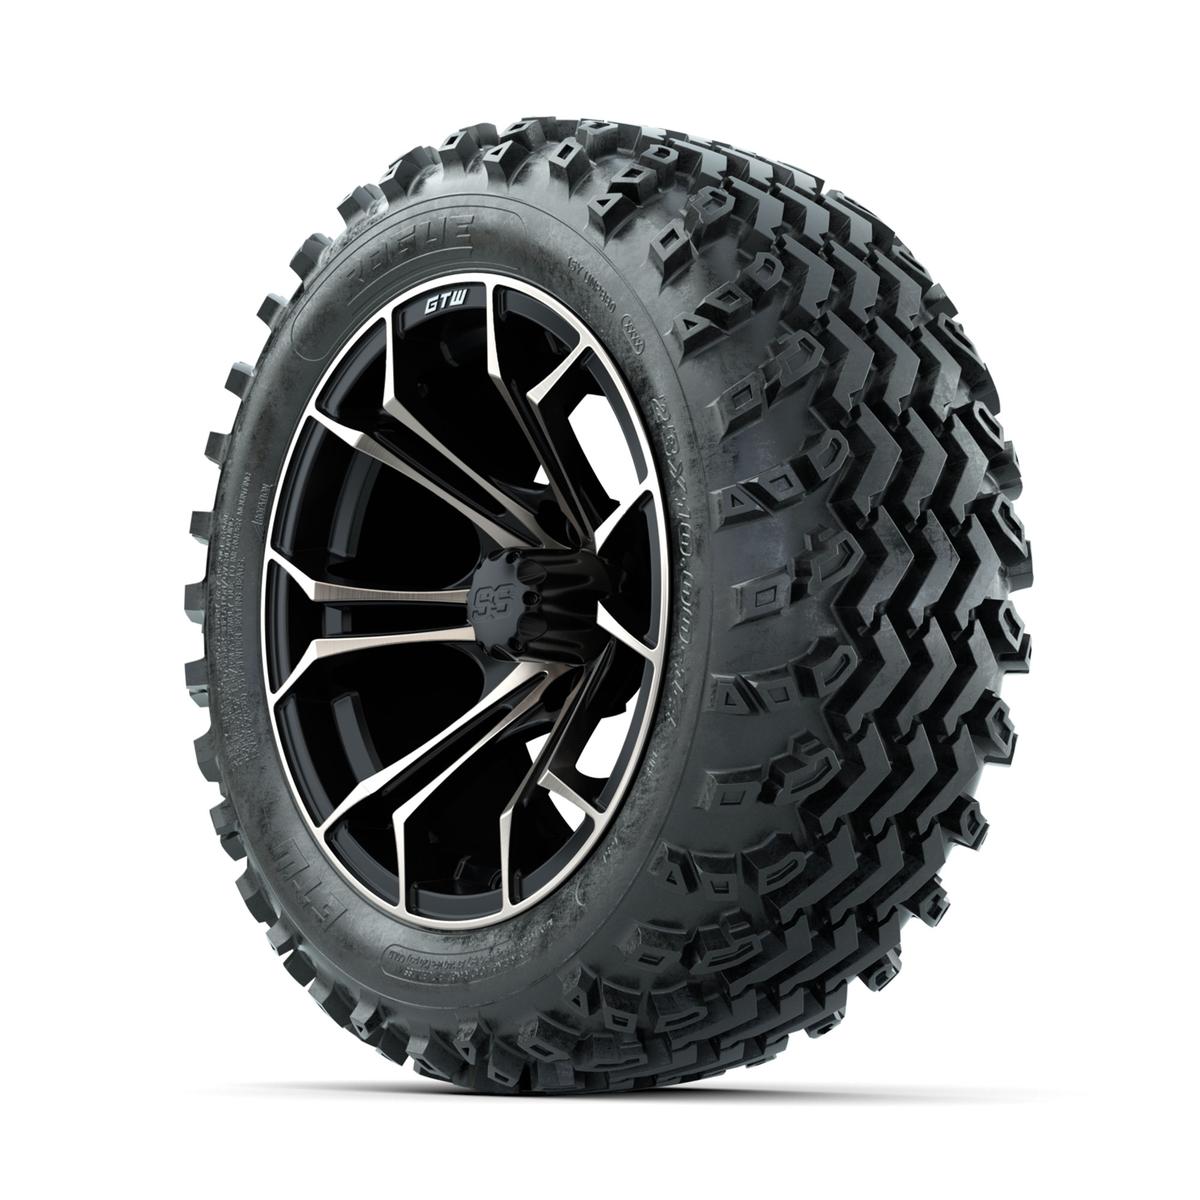 GTW Spyder Bronze/Matte Black 14 in Wheels with 23x10.00-14 Rogue All Terrain Tires – Full Set